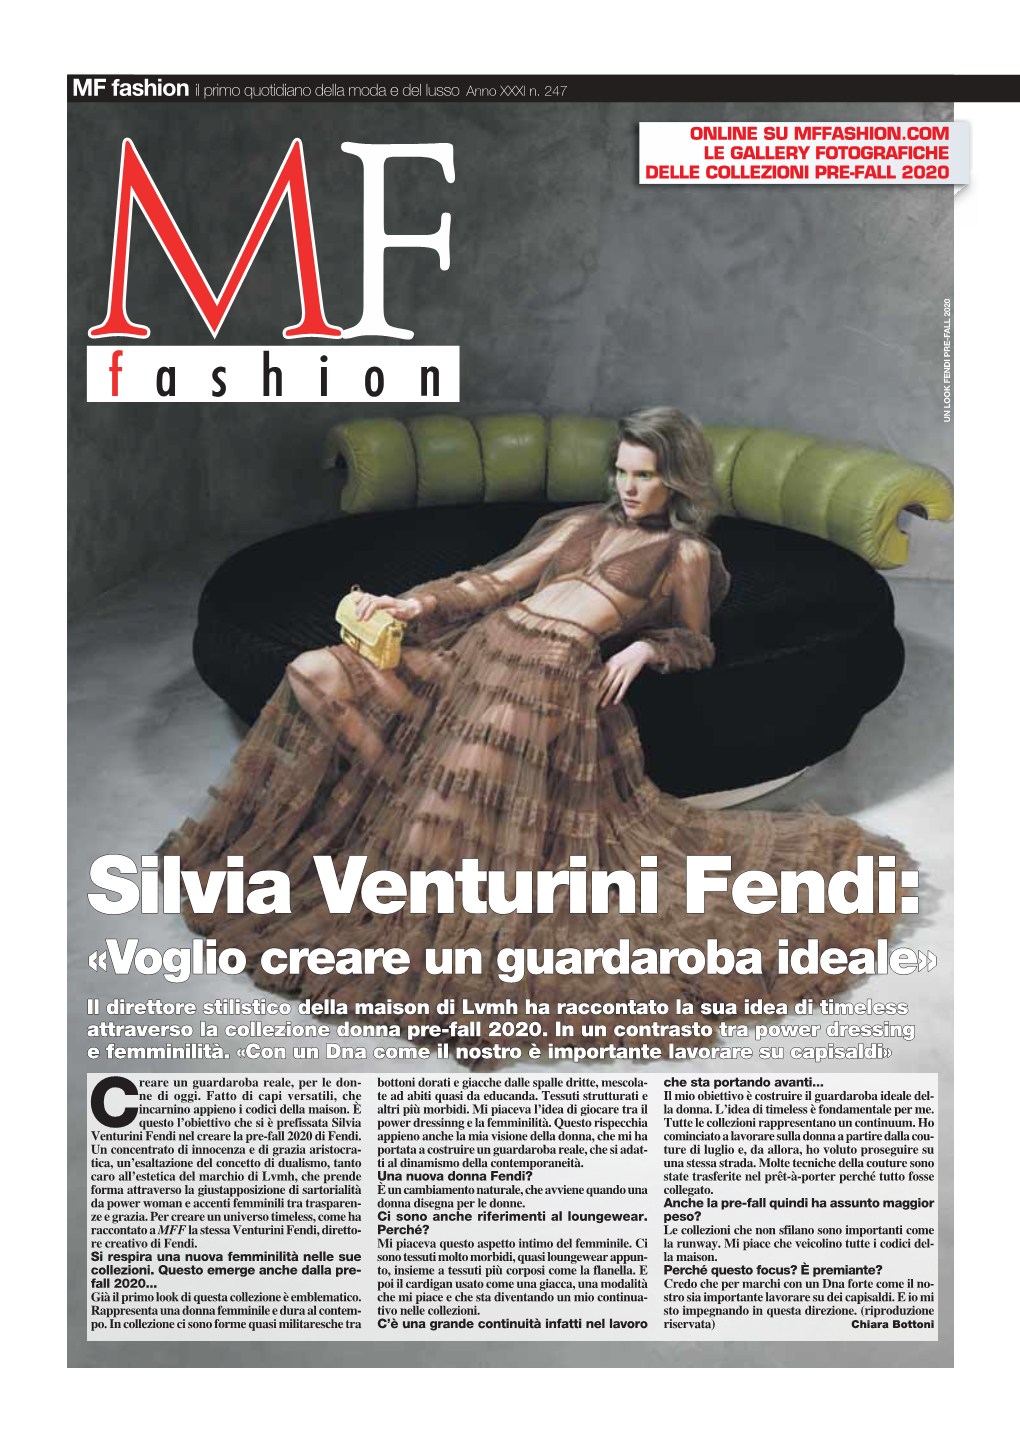 Silvia Venturini Fendi